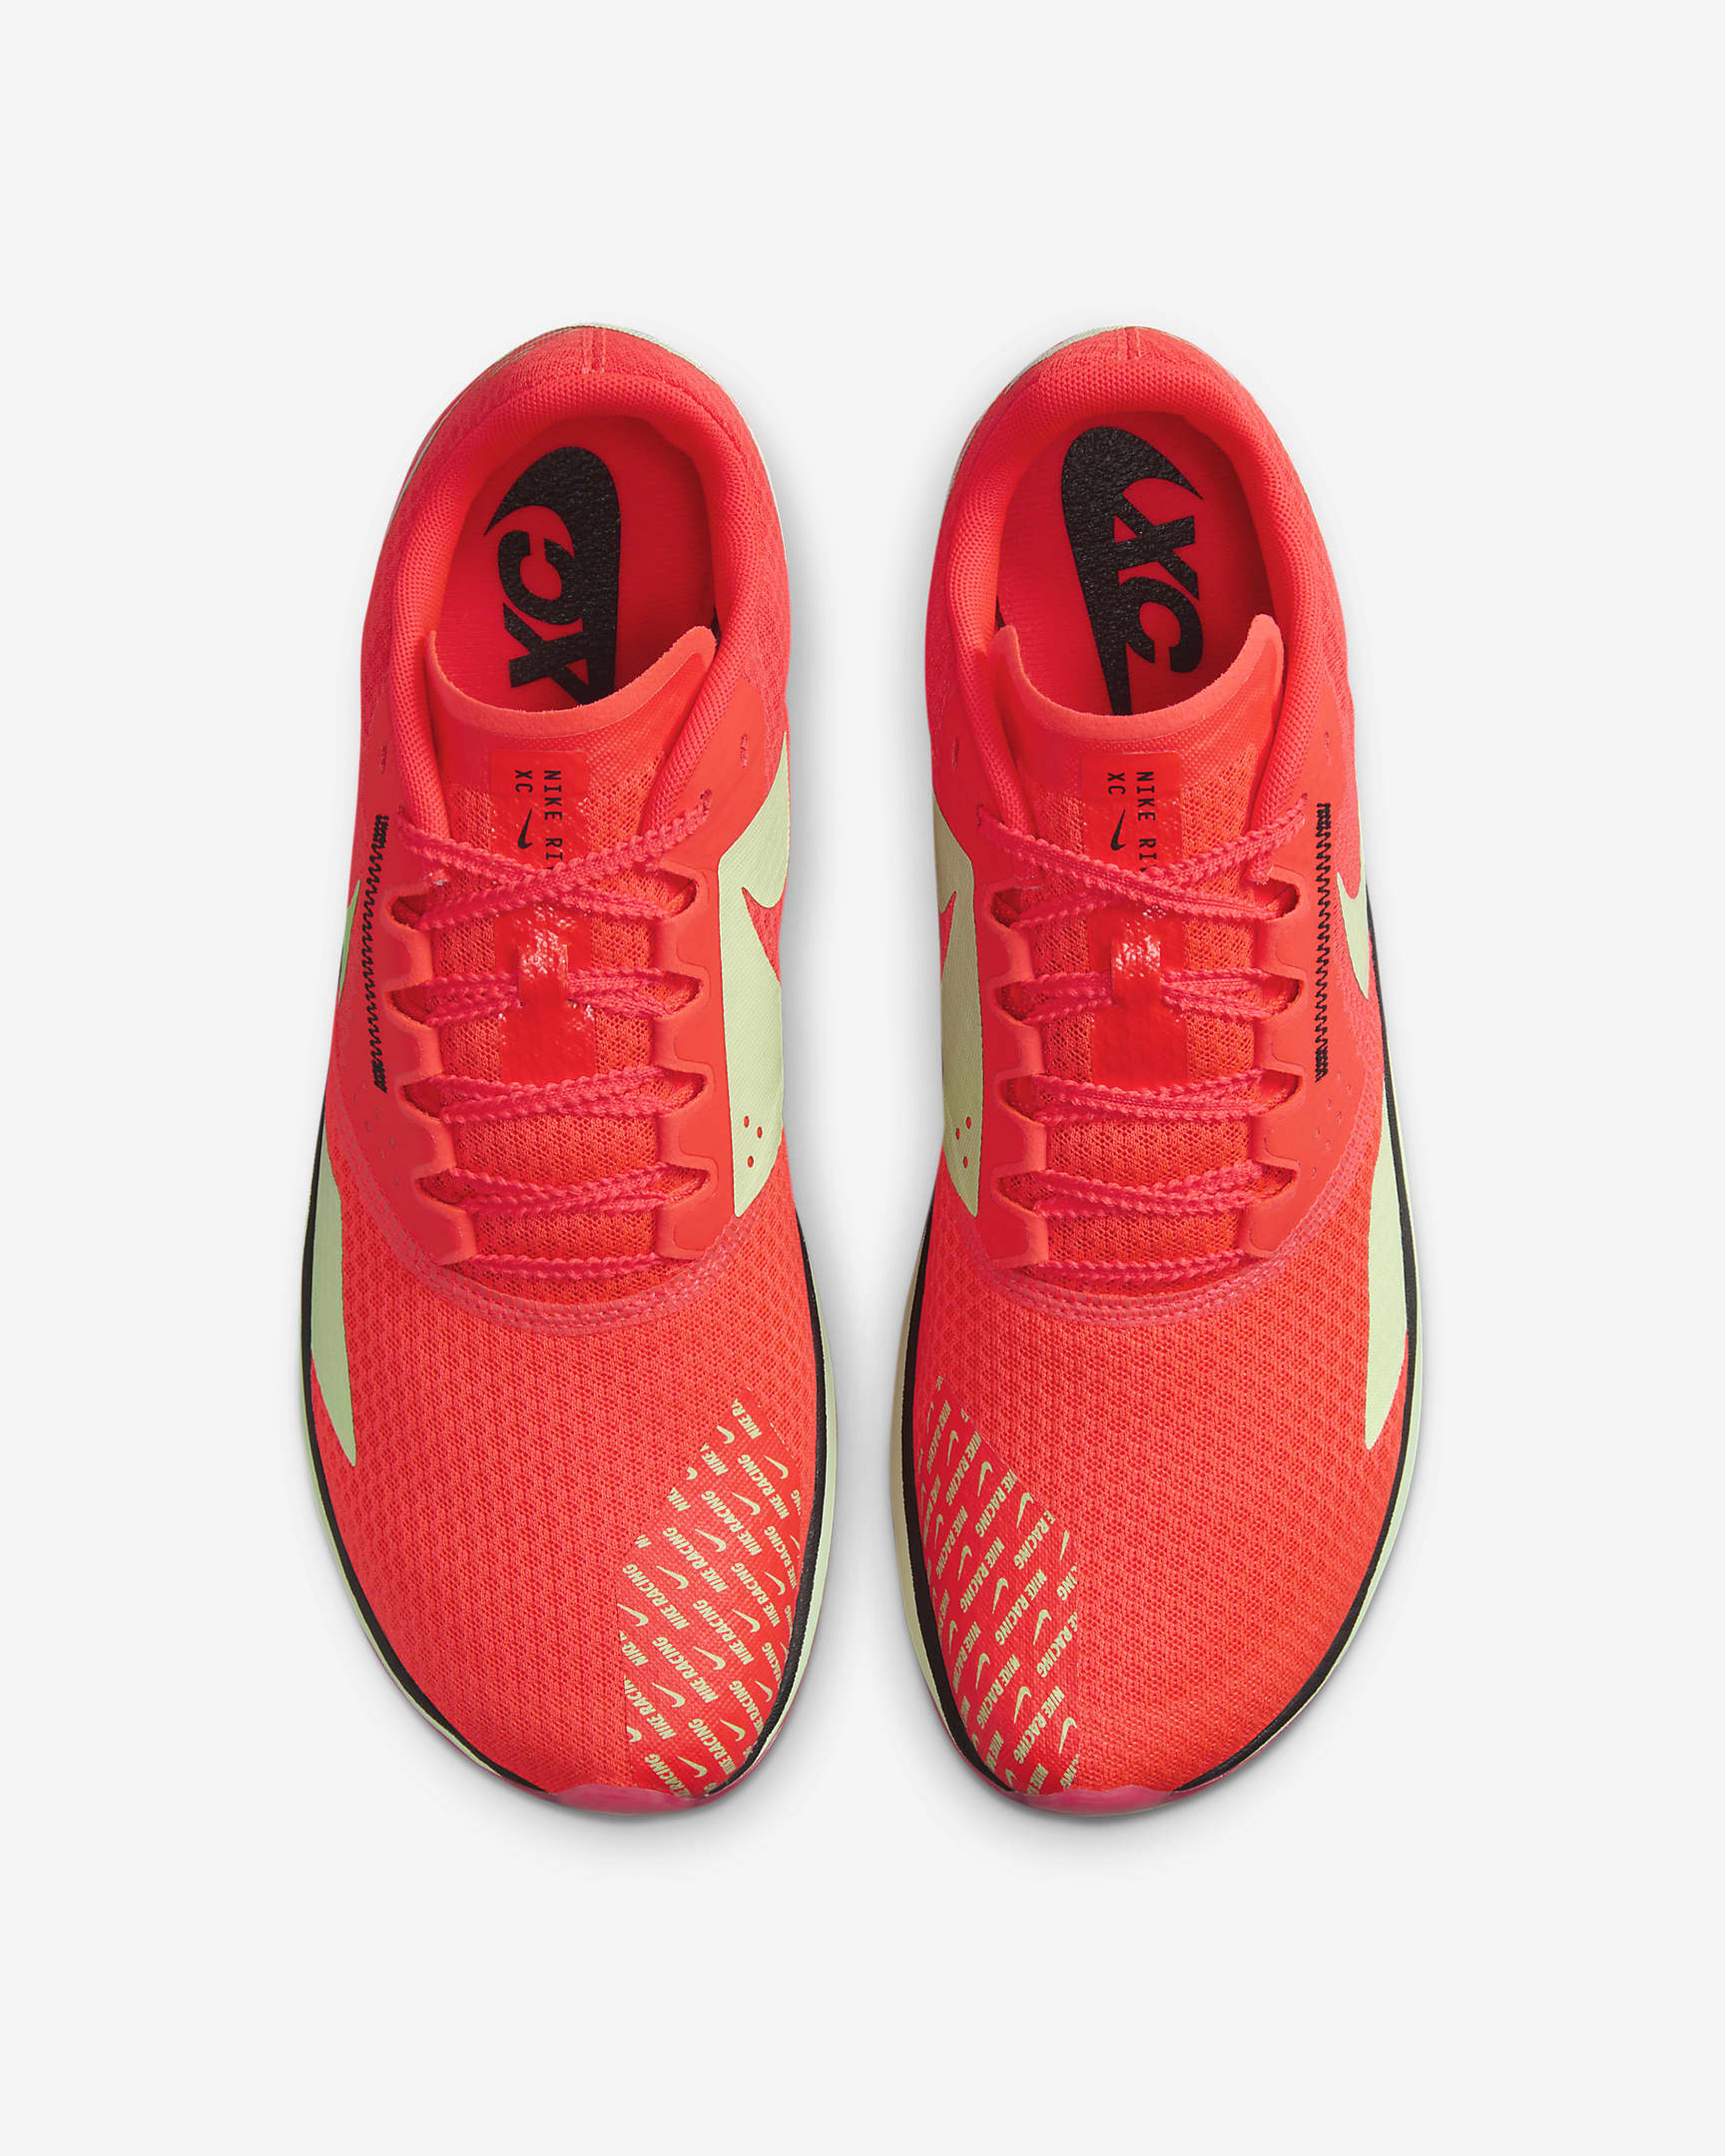 Nike Rival XC 6 Cross-Country Spikes - Bright Crimson/Black/Metallic Silver/Vapor Green